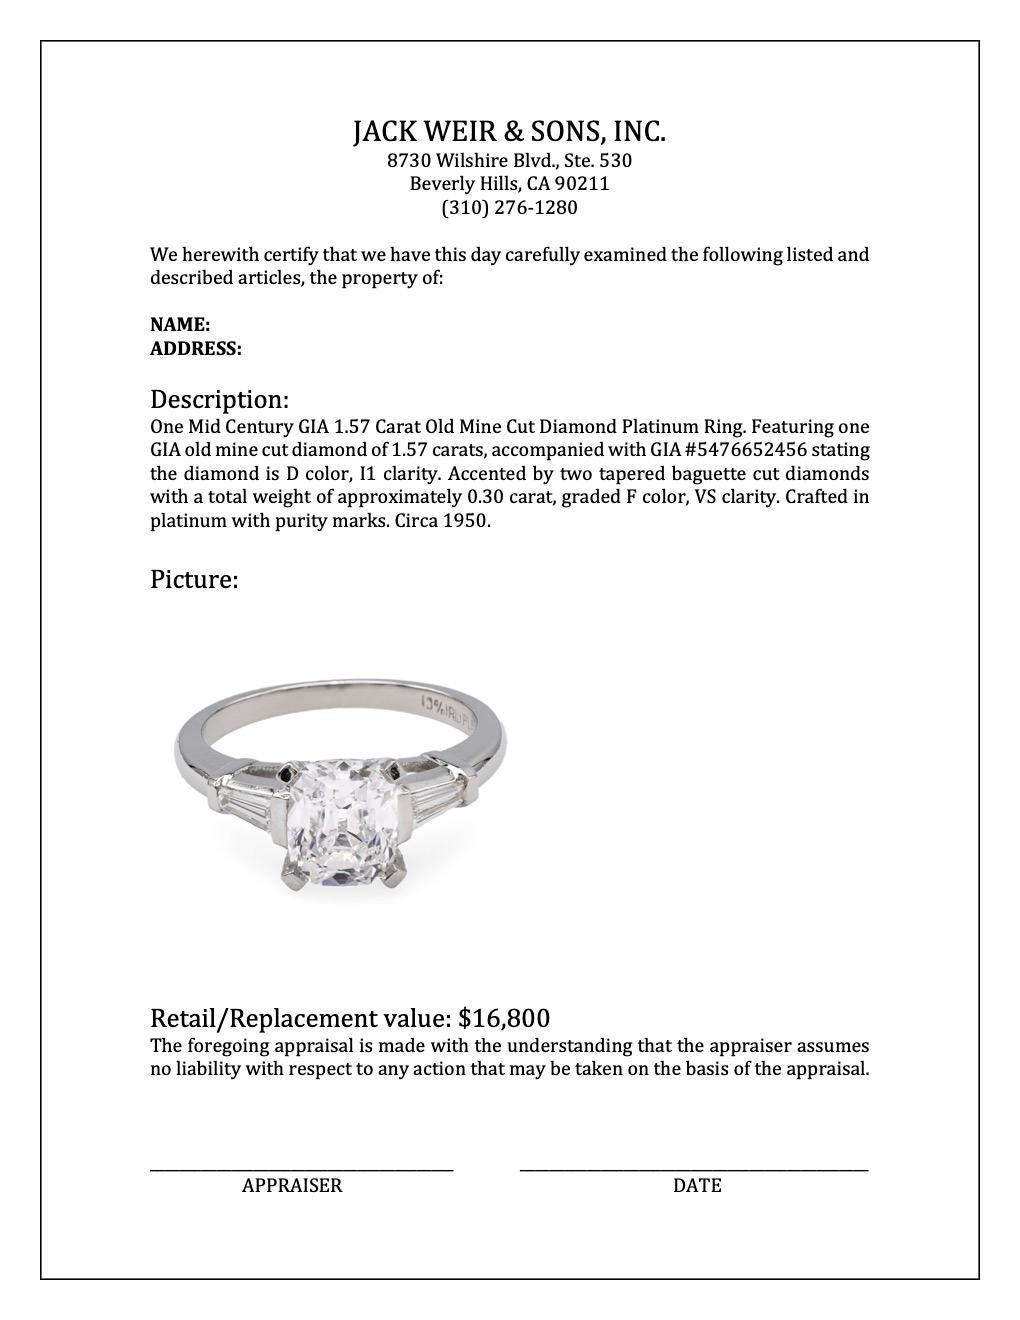 Mid Century GIA 1.57 Carat Old Mine Cut Diamond Platinum Ring For Sale 3